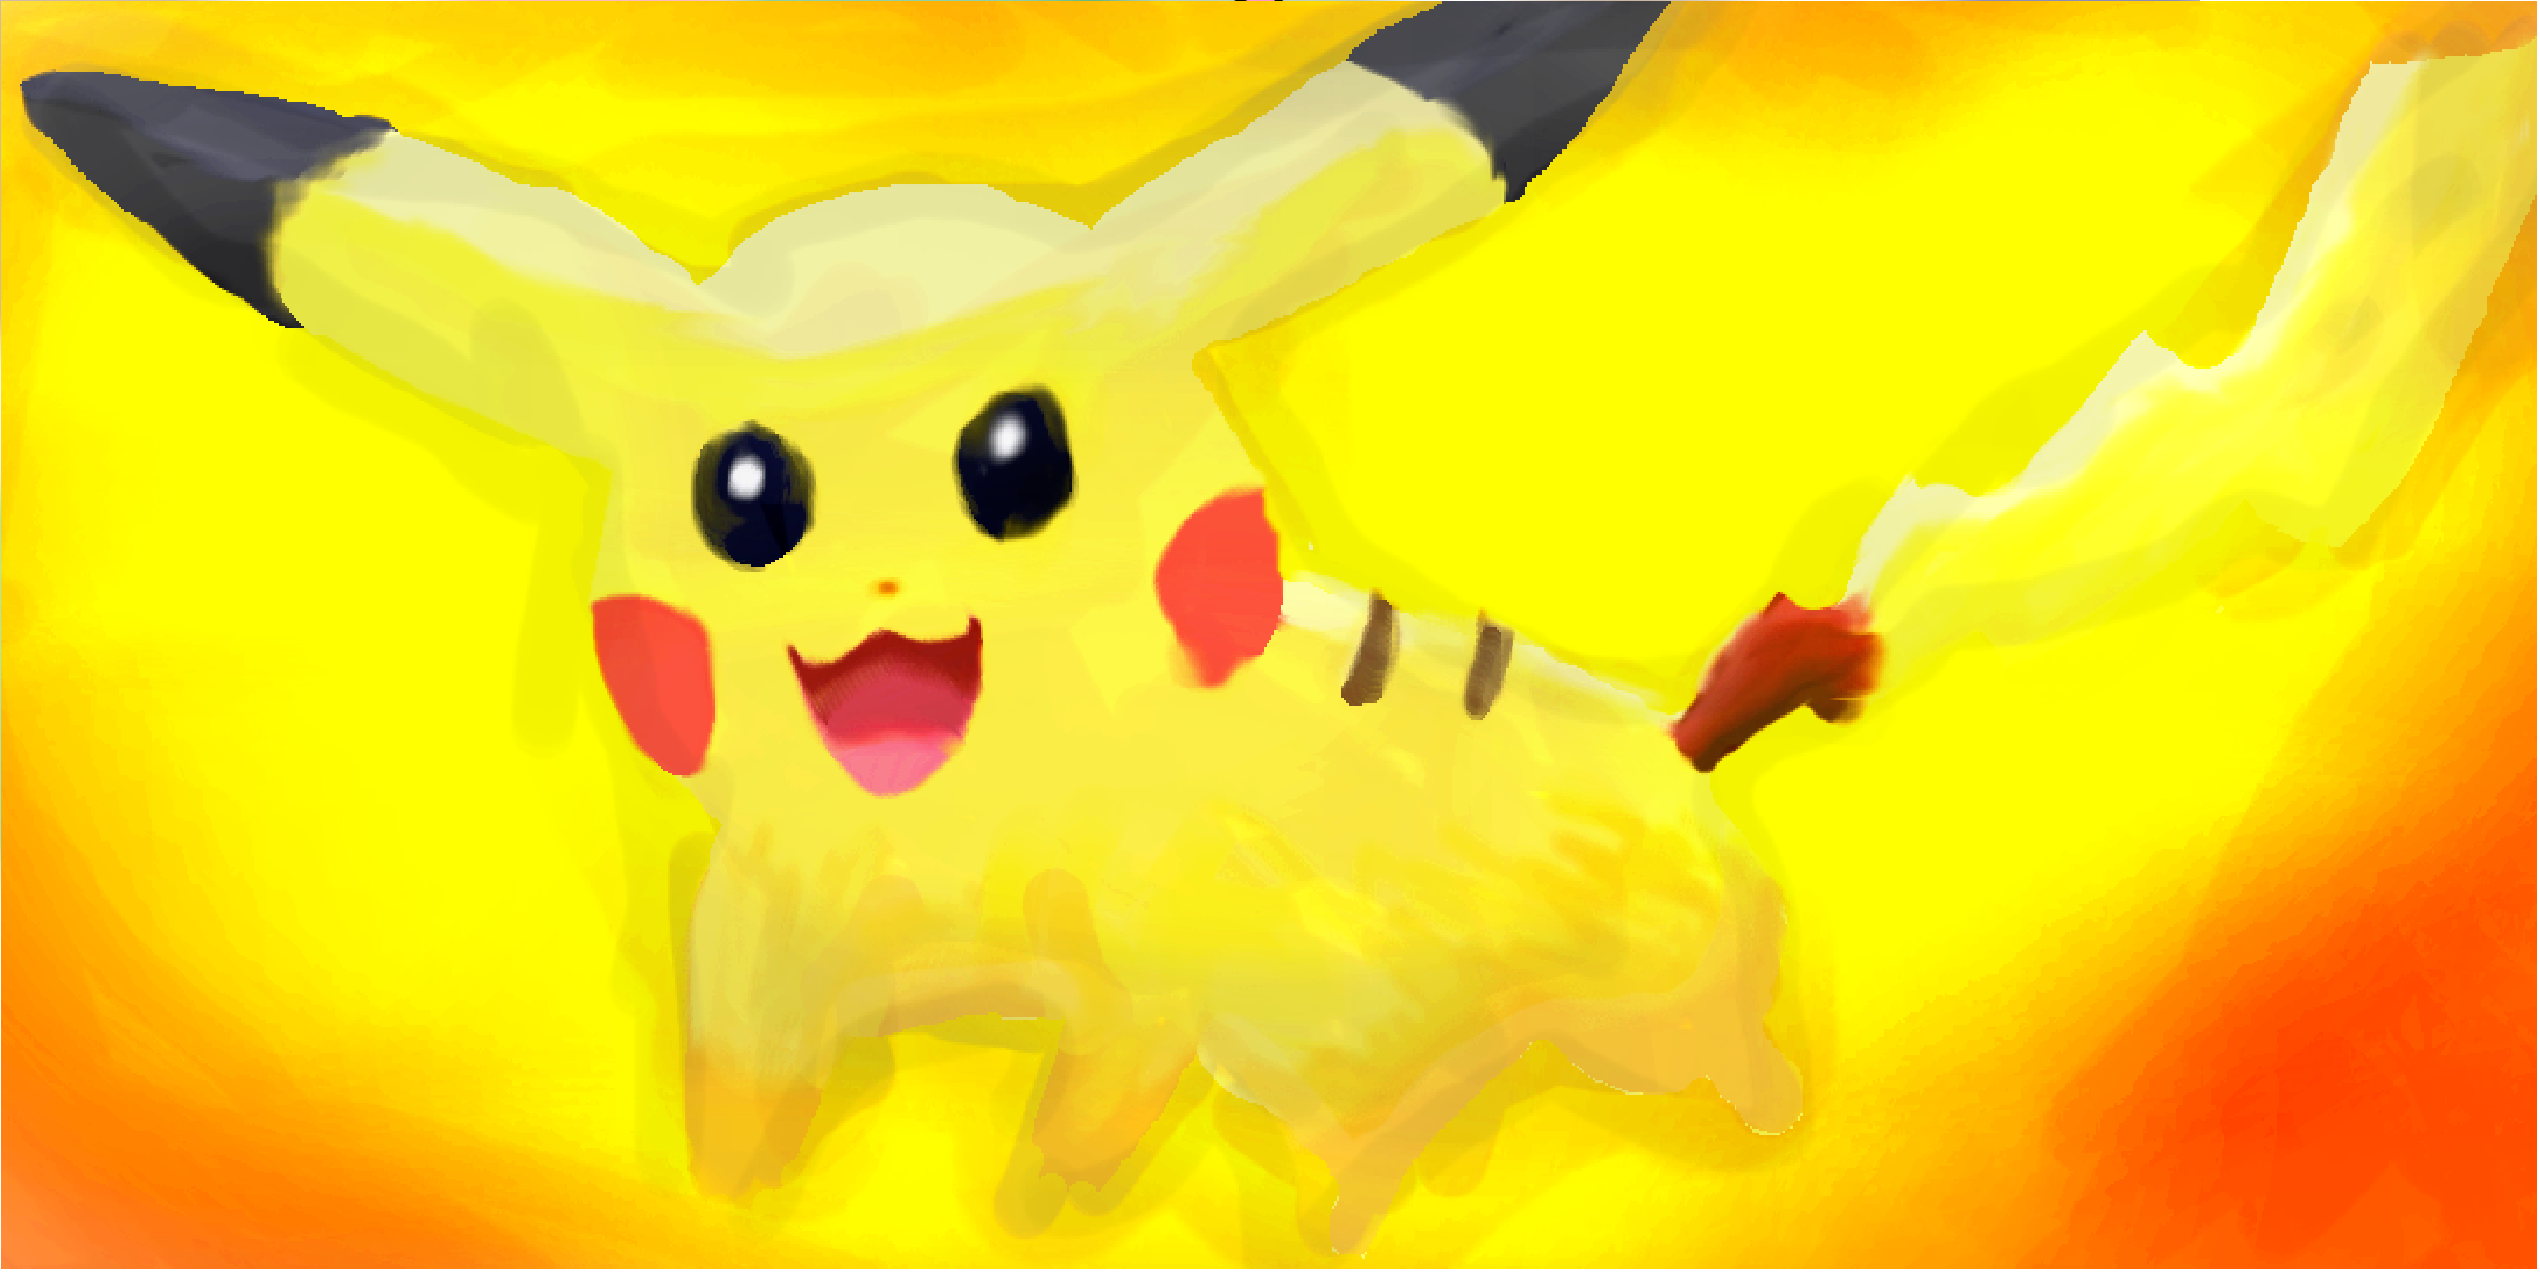 Pokemon: Pikachu - Thundershock by Cleasia on DeviantArt